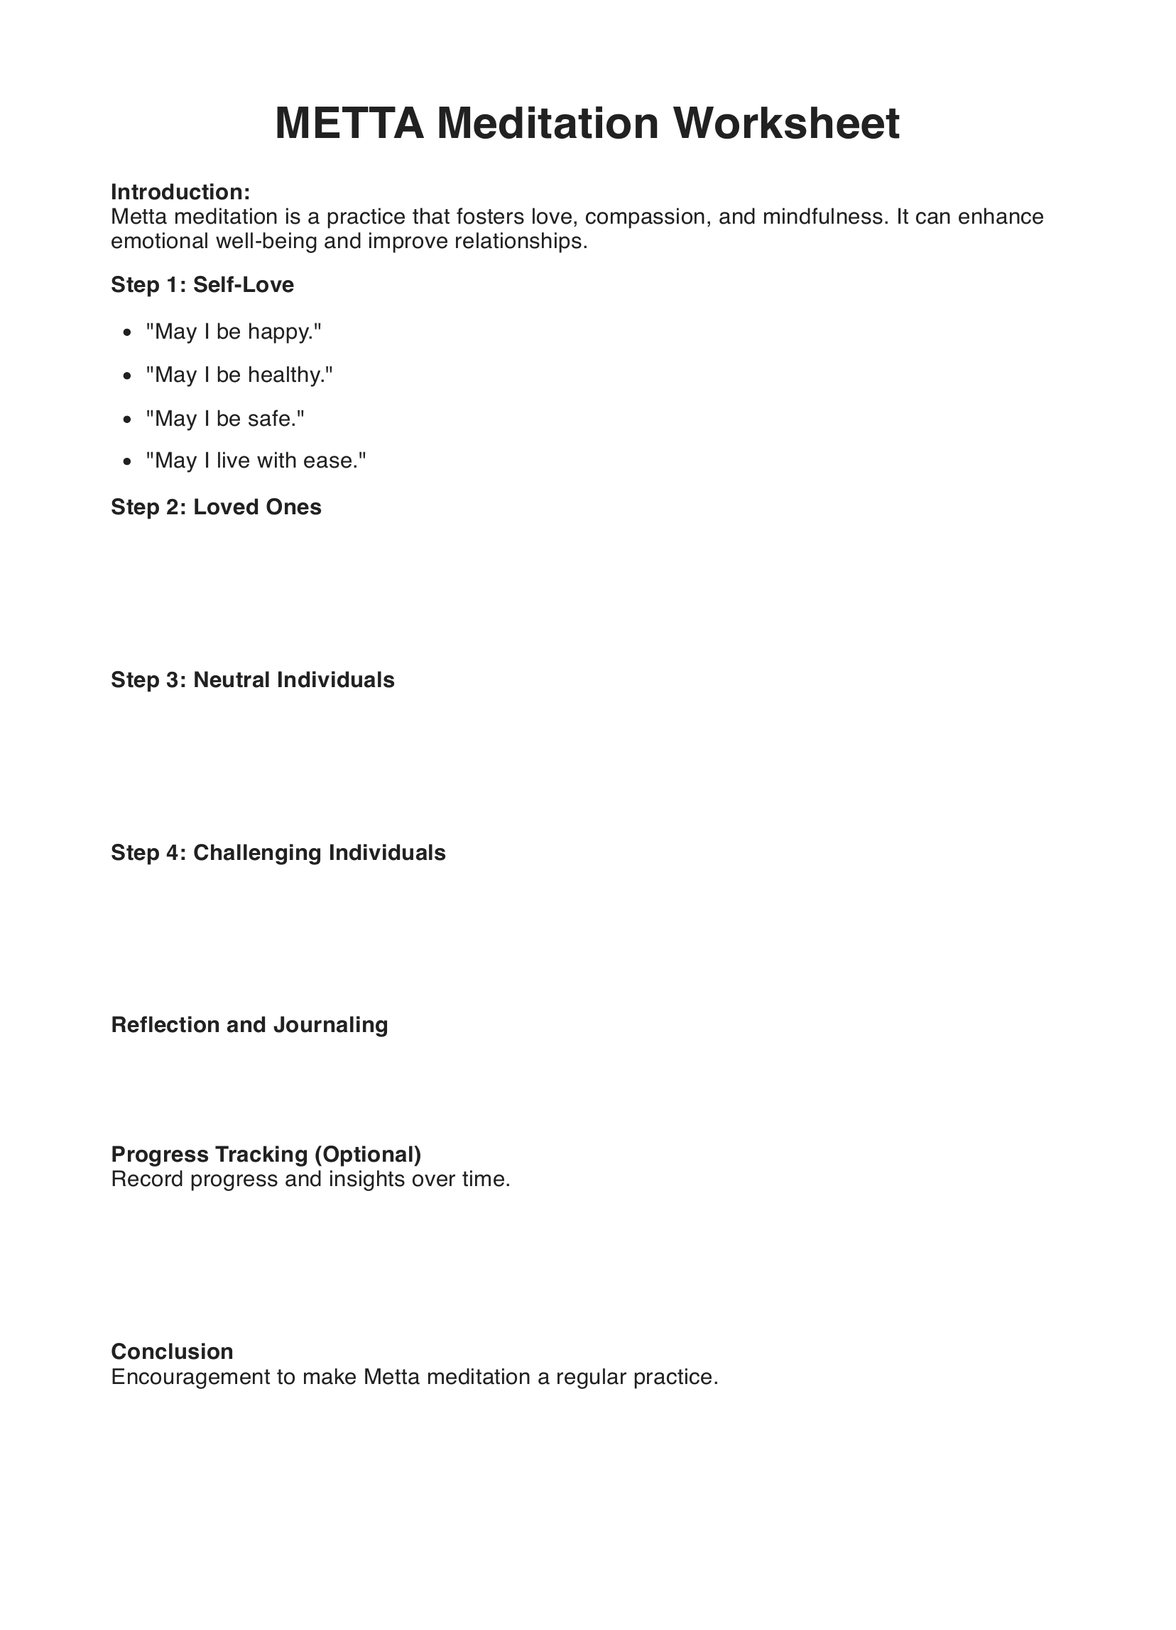 METTA Meditation Worksheet PDF Example